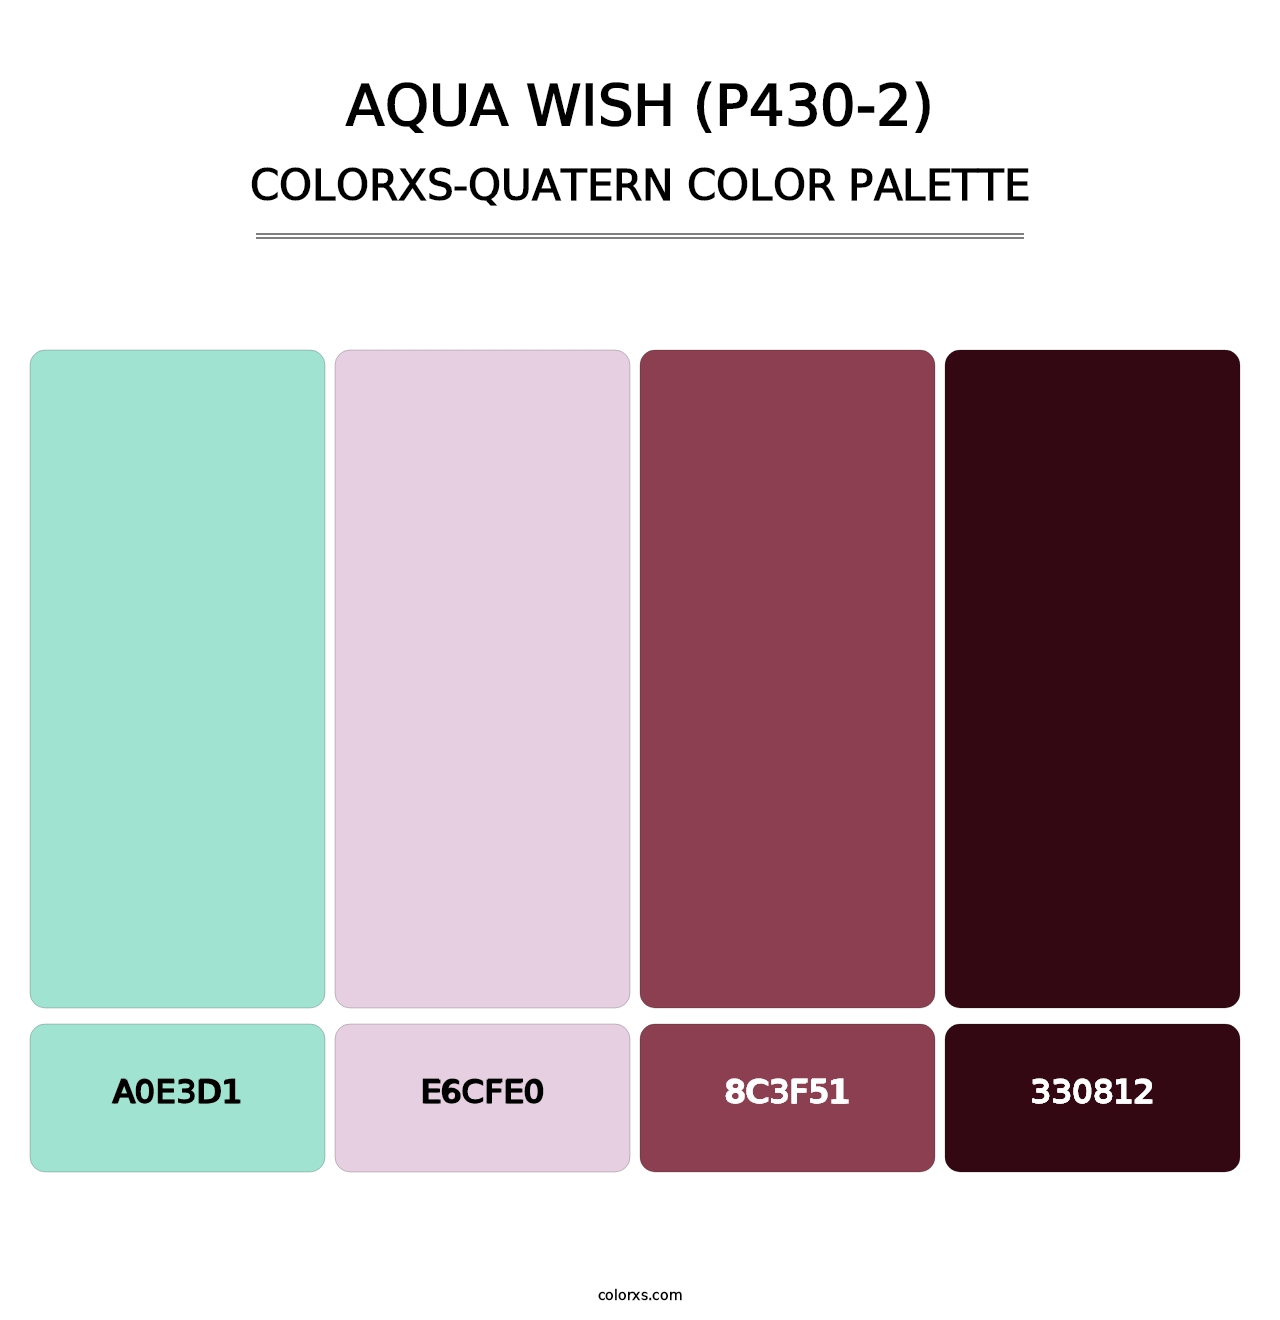 Aqua Wish (P430-2) - Colorxs Quatern Palette